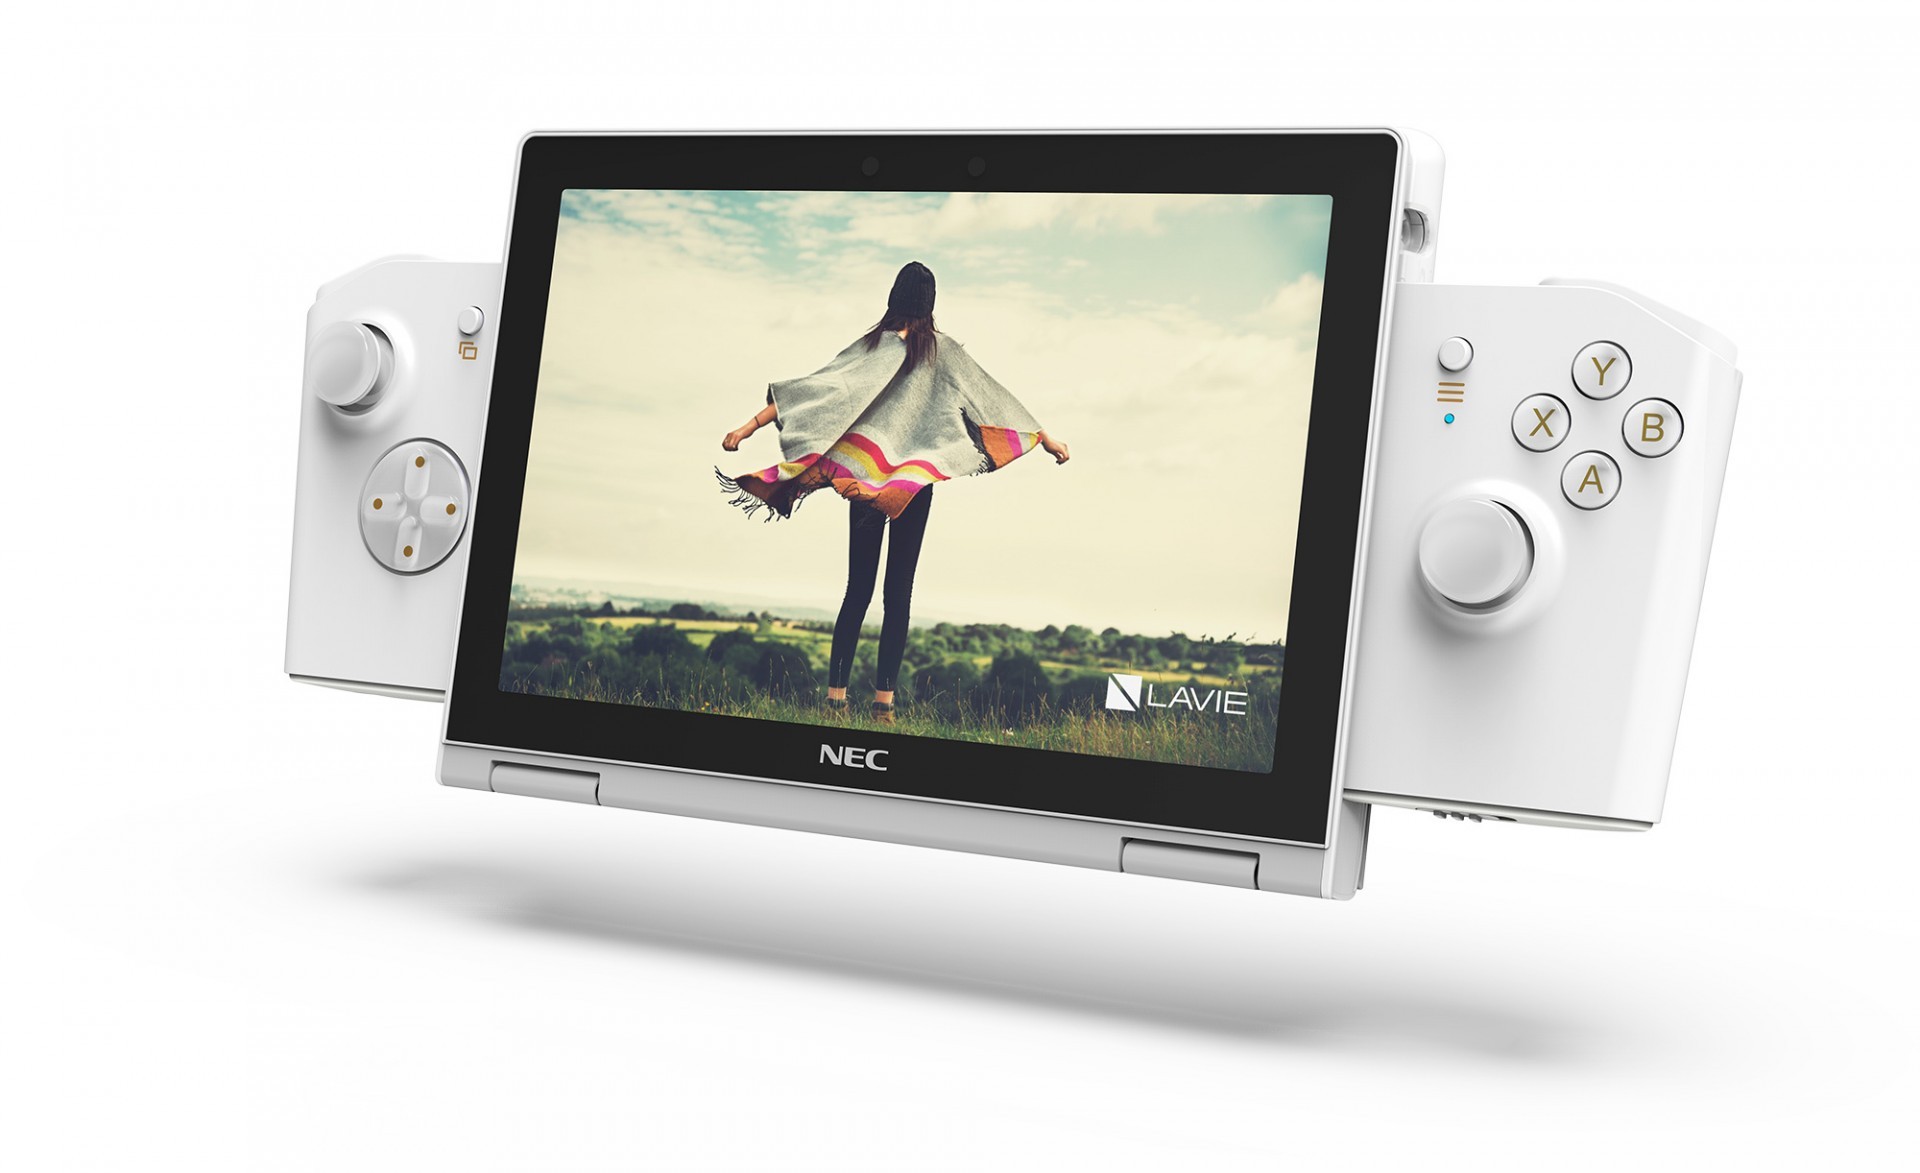 NEC 发表类 Switch 8 吋二合一笔电 支援握把控制器与底座大萤幕输出